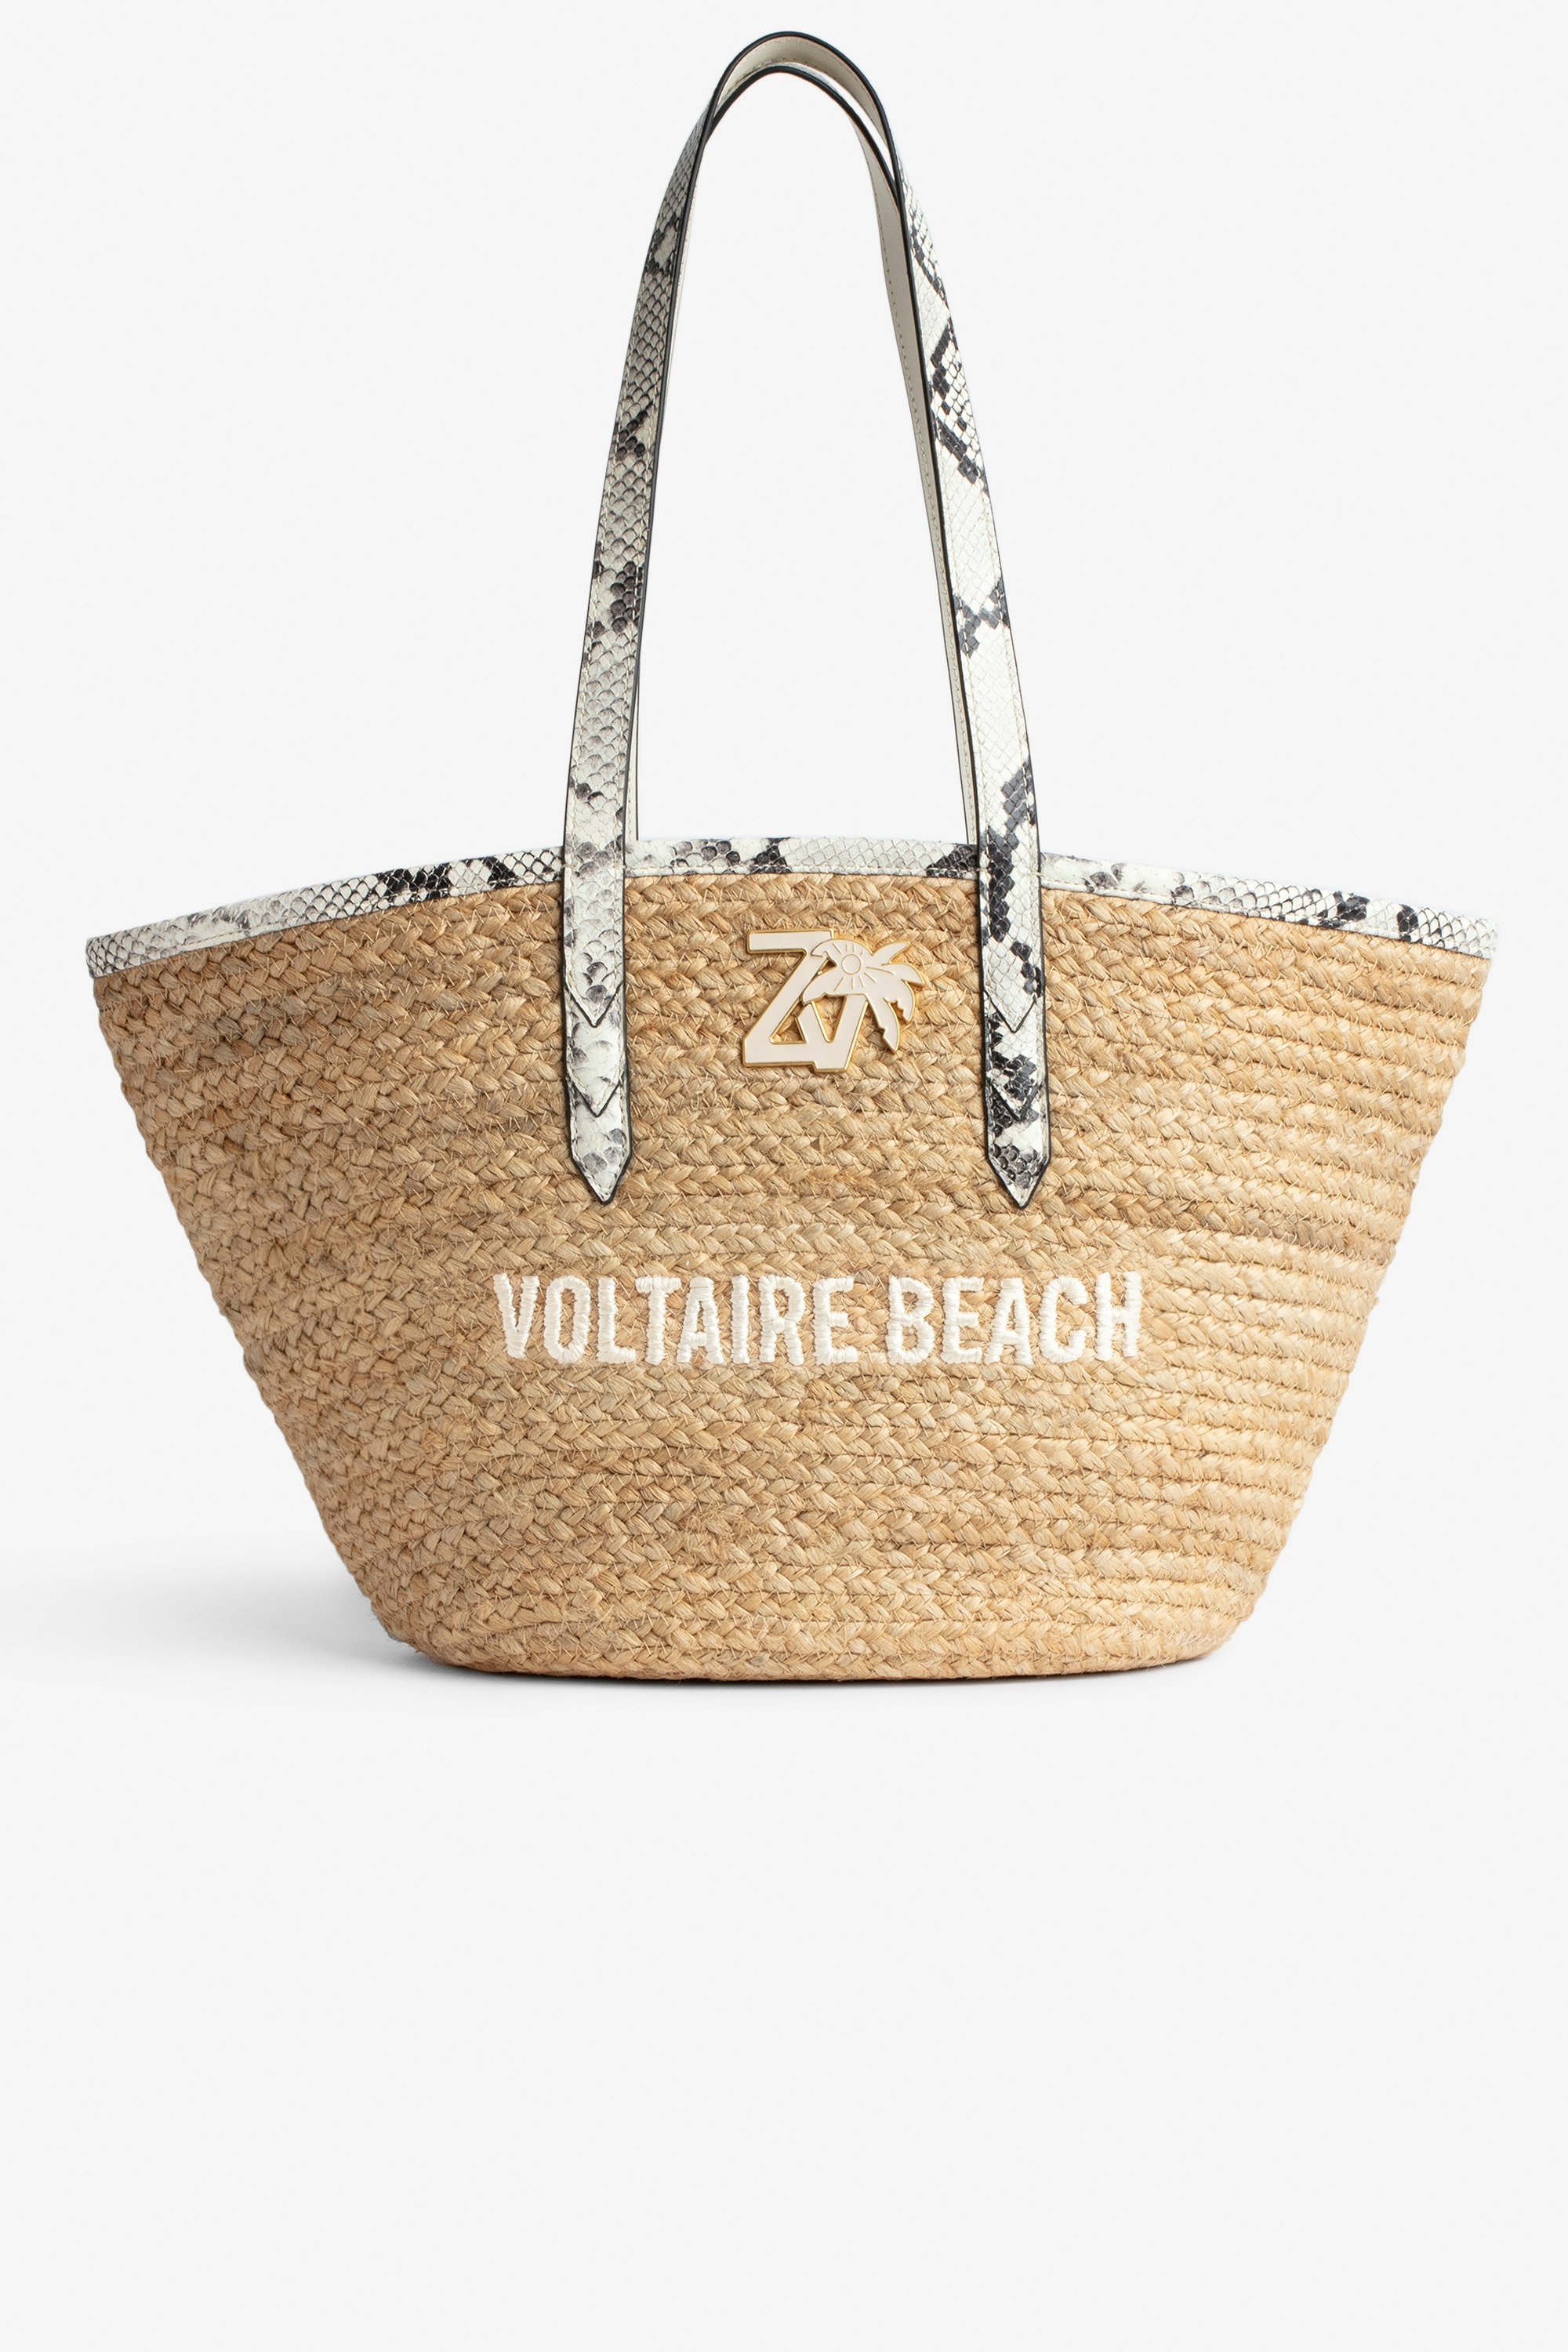 Bolso Le Beach Bag Bolso de paja con asas de cuero color crudo efecto pitón, bordado «Voltaire Beach» y con colgante ZV Mujer